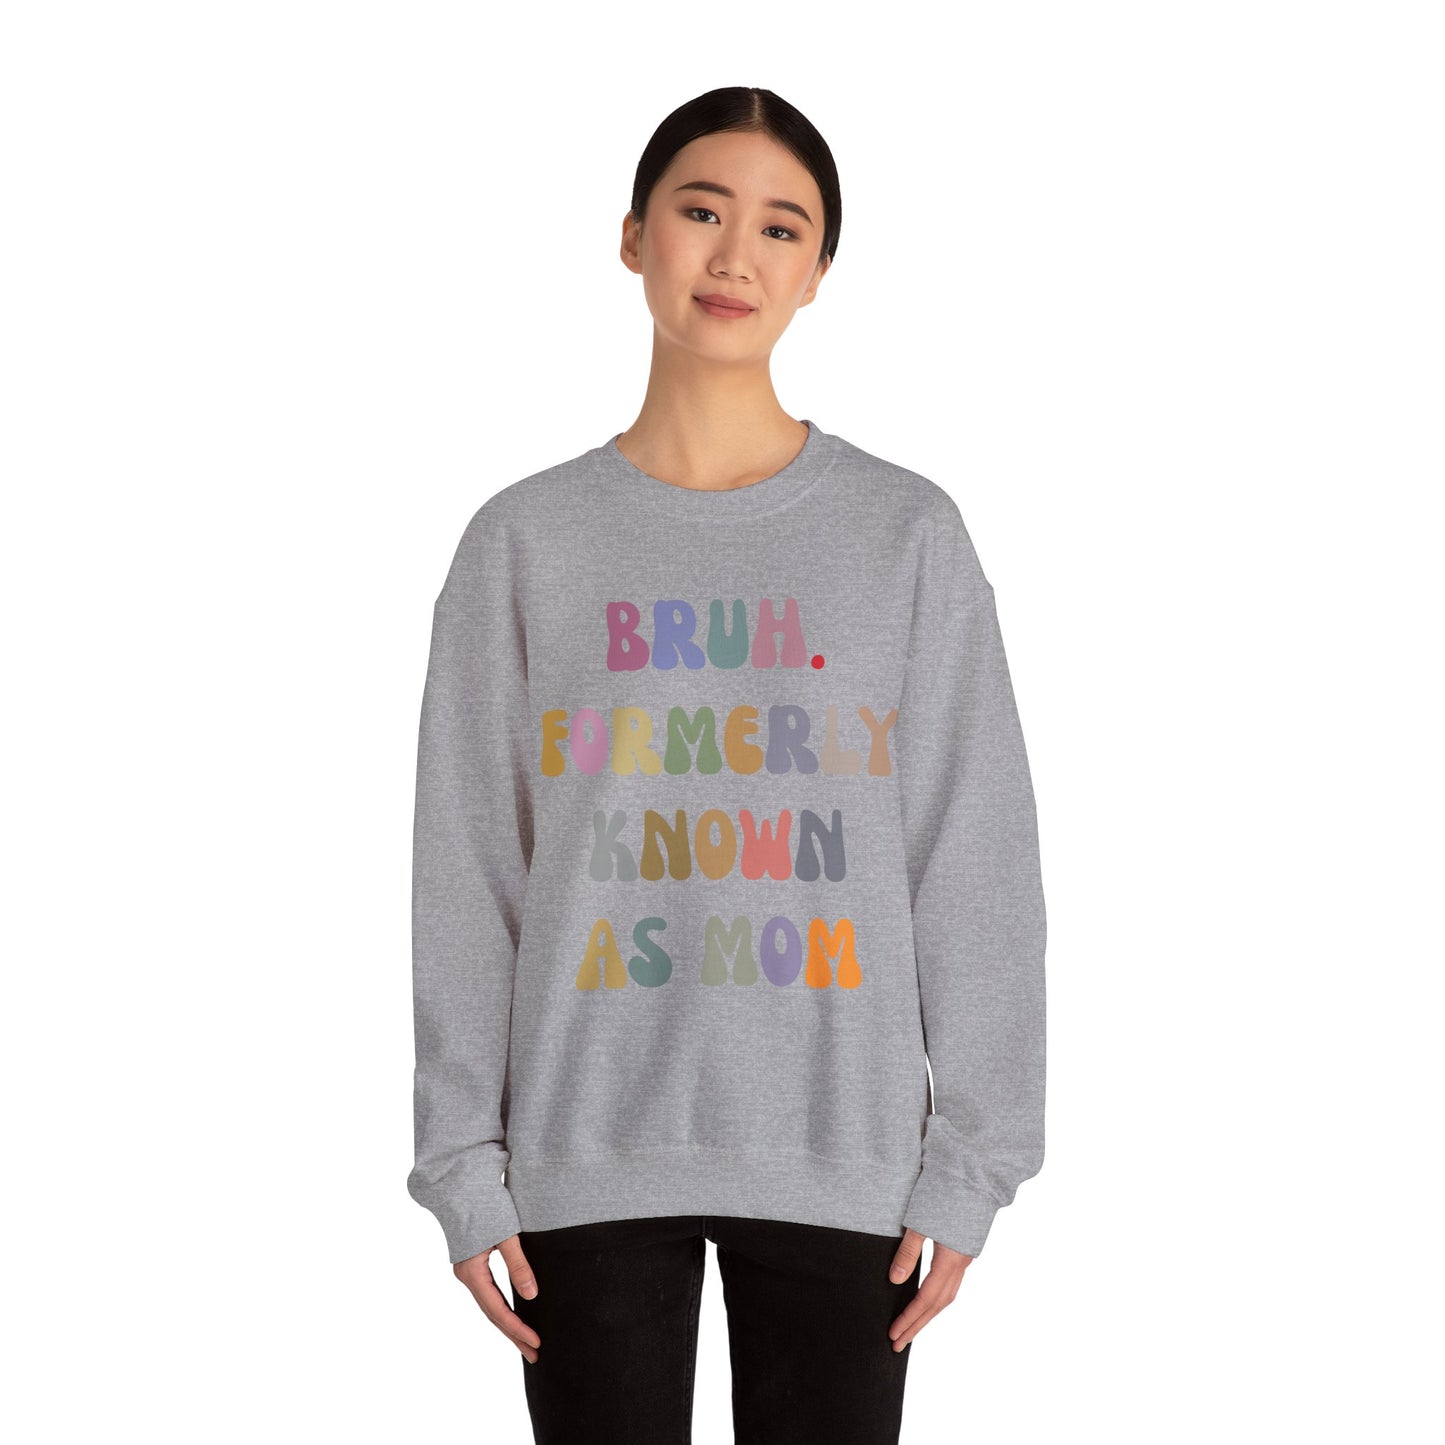 Bruh Formerly Known As Mom Sweatshirt, Mom Mommy Bruh, Christmas mom sweatshirt, Bruh Mom Shirt, Sarcastic Mom sweatshirt, S1216